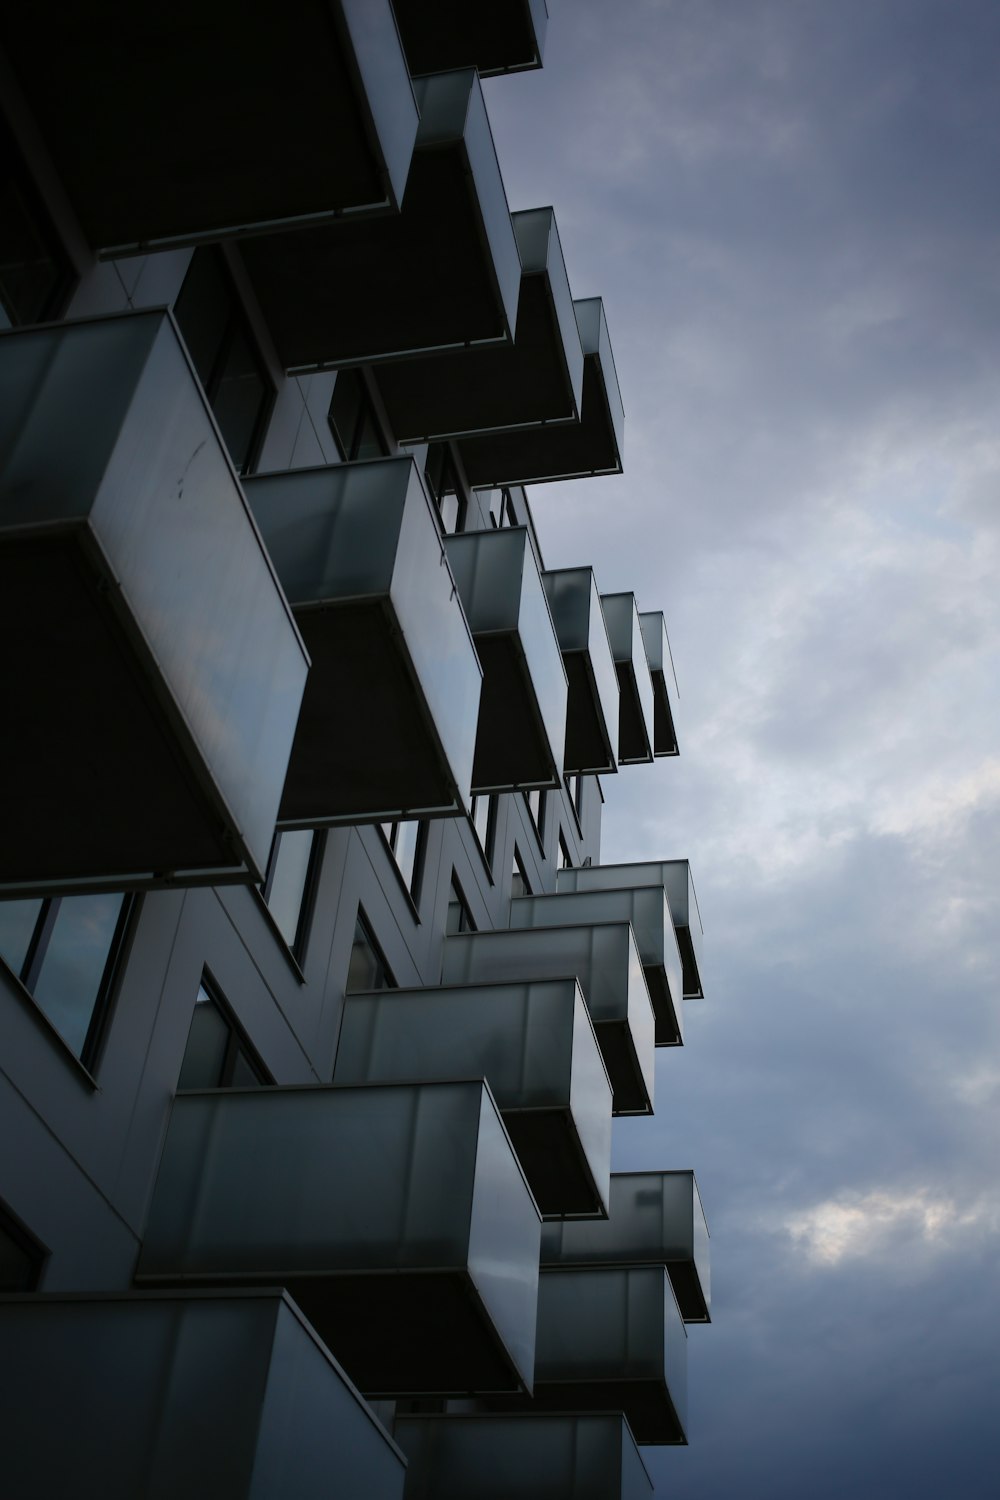 Edificios de gran altura con paredes de vidrio gris